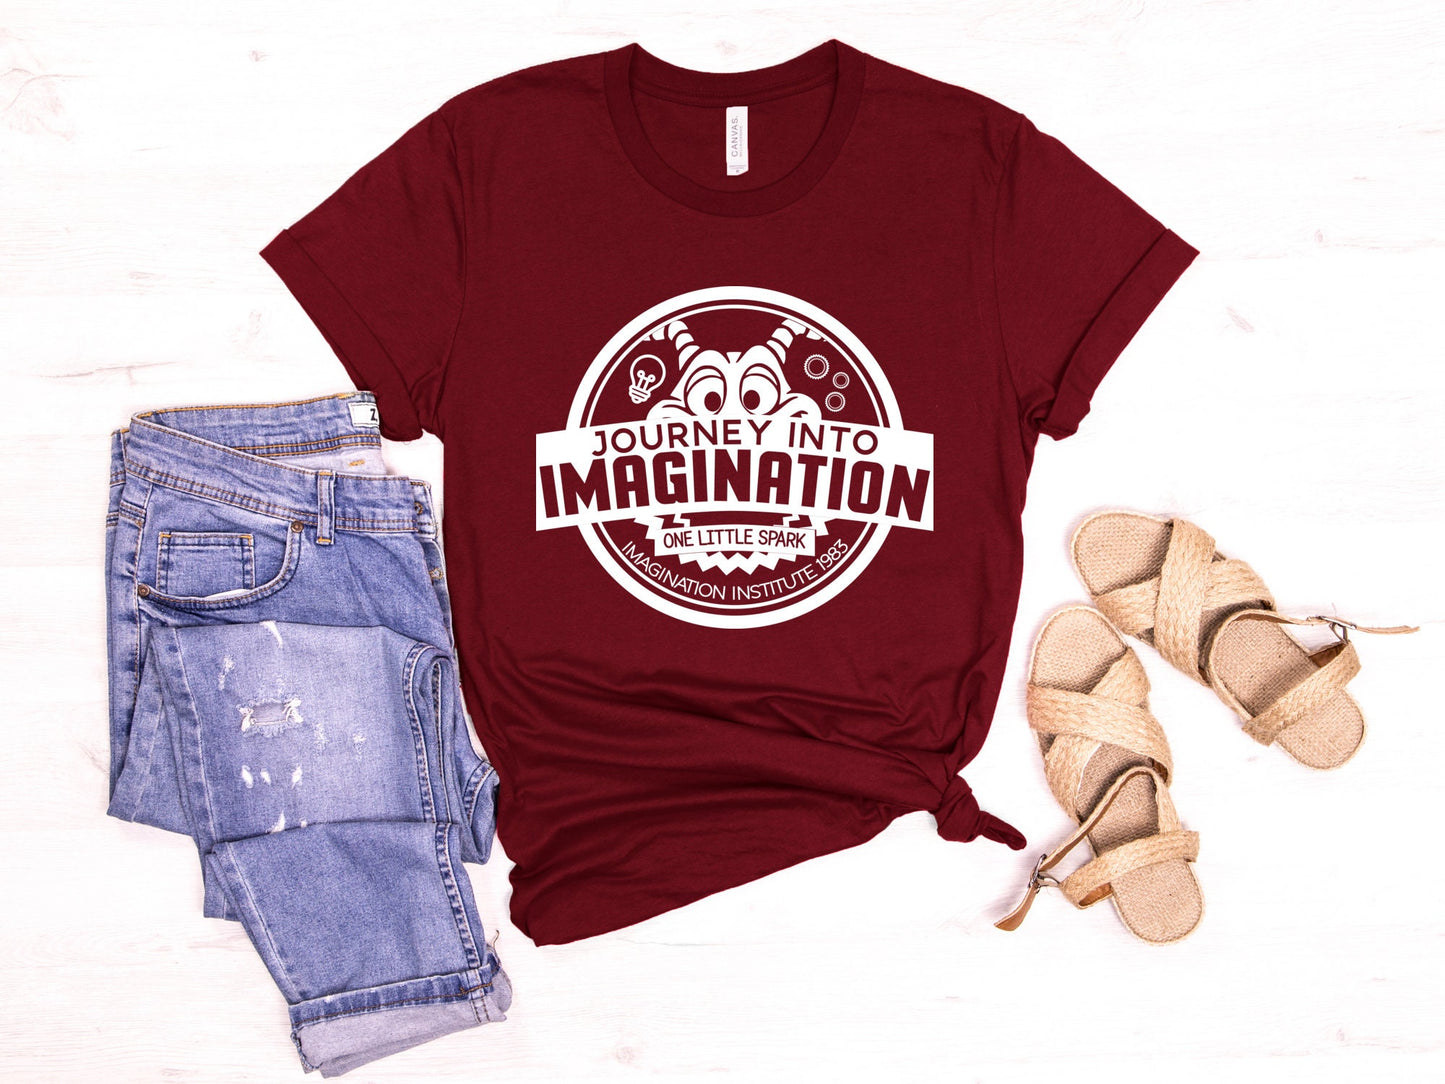 One Little Spark Shirt,  Journey Into Imagination Shirt, Imagination Adventure Shirt, Disney Vacation Shirt, Family Disney Trip Shirt